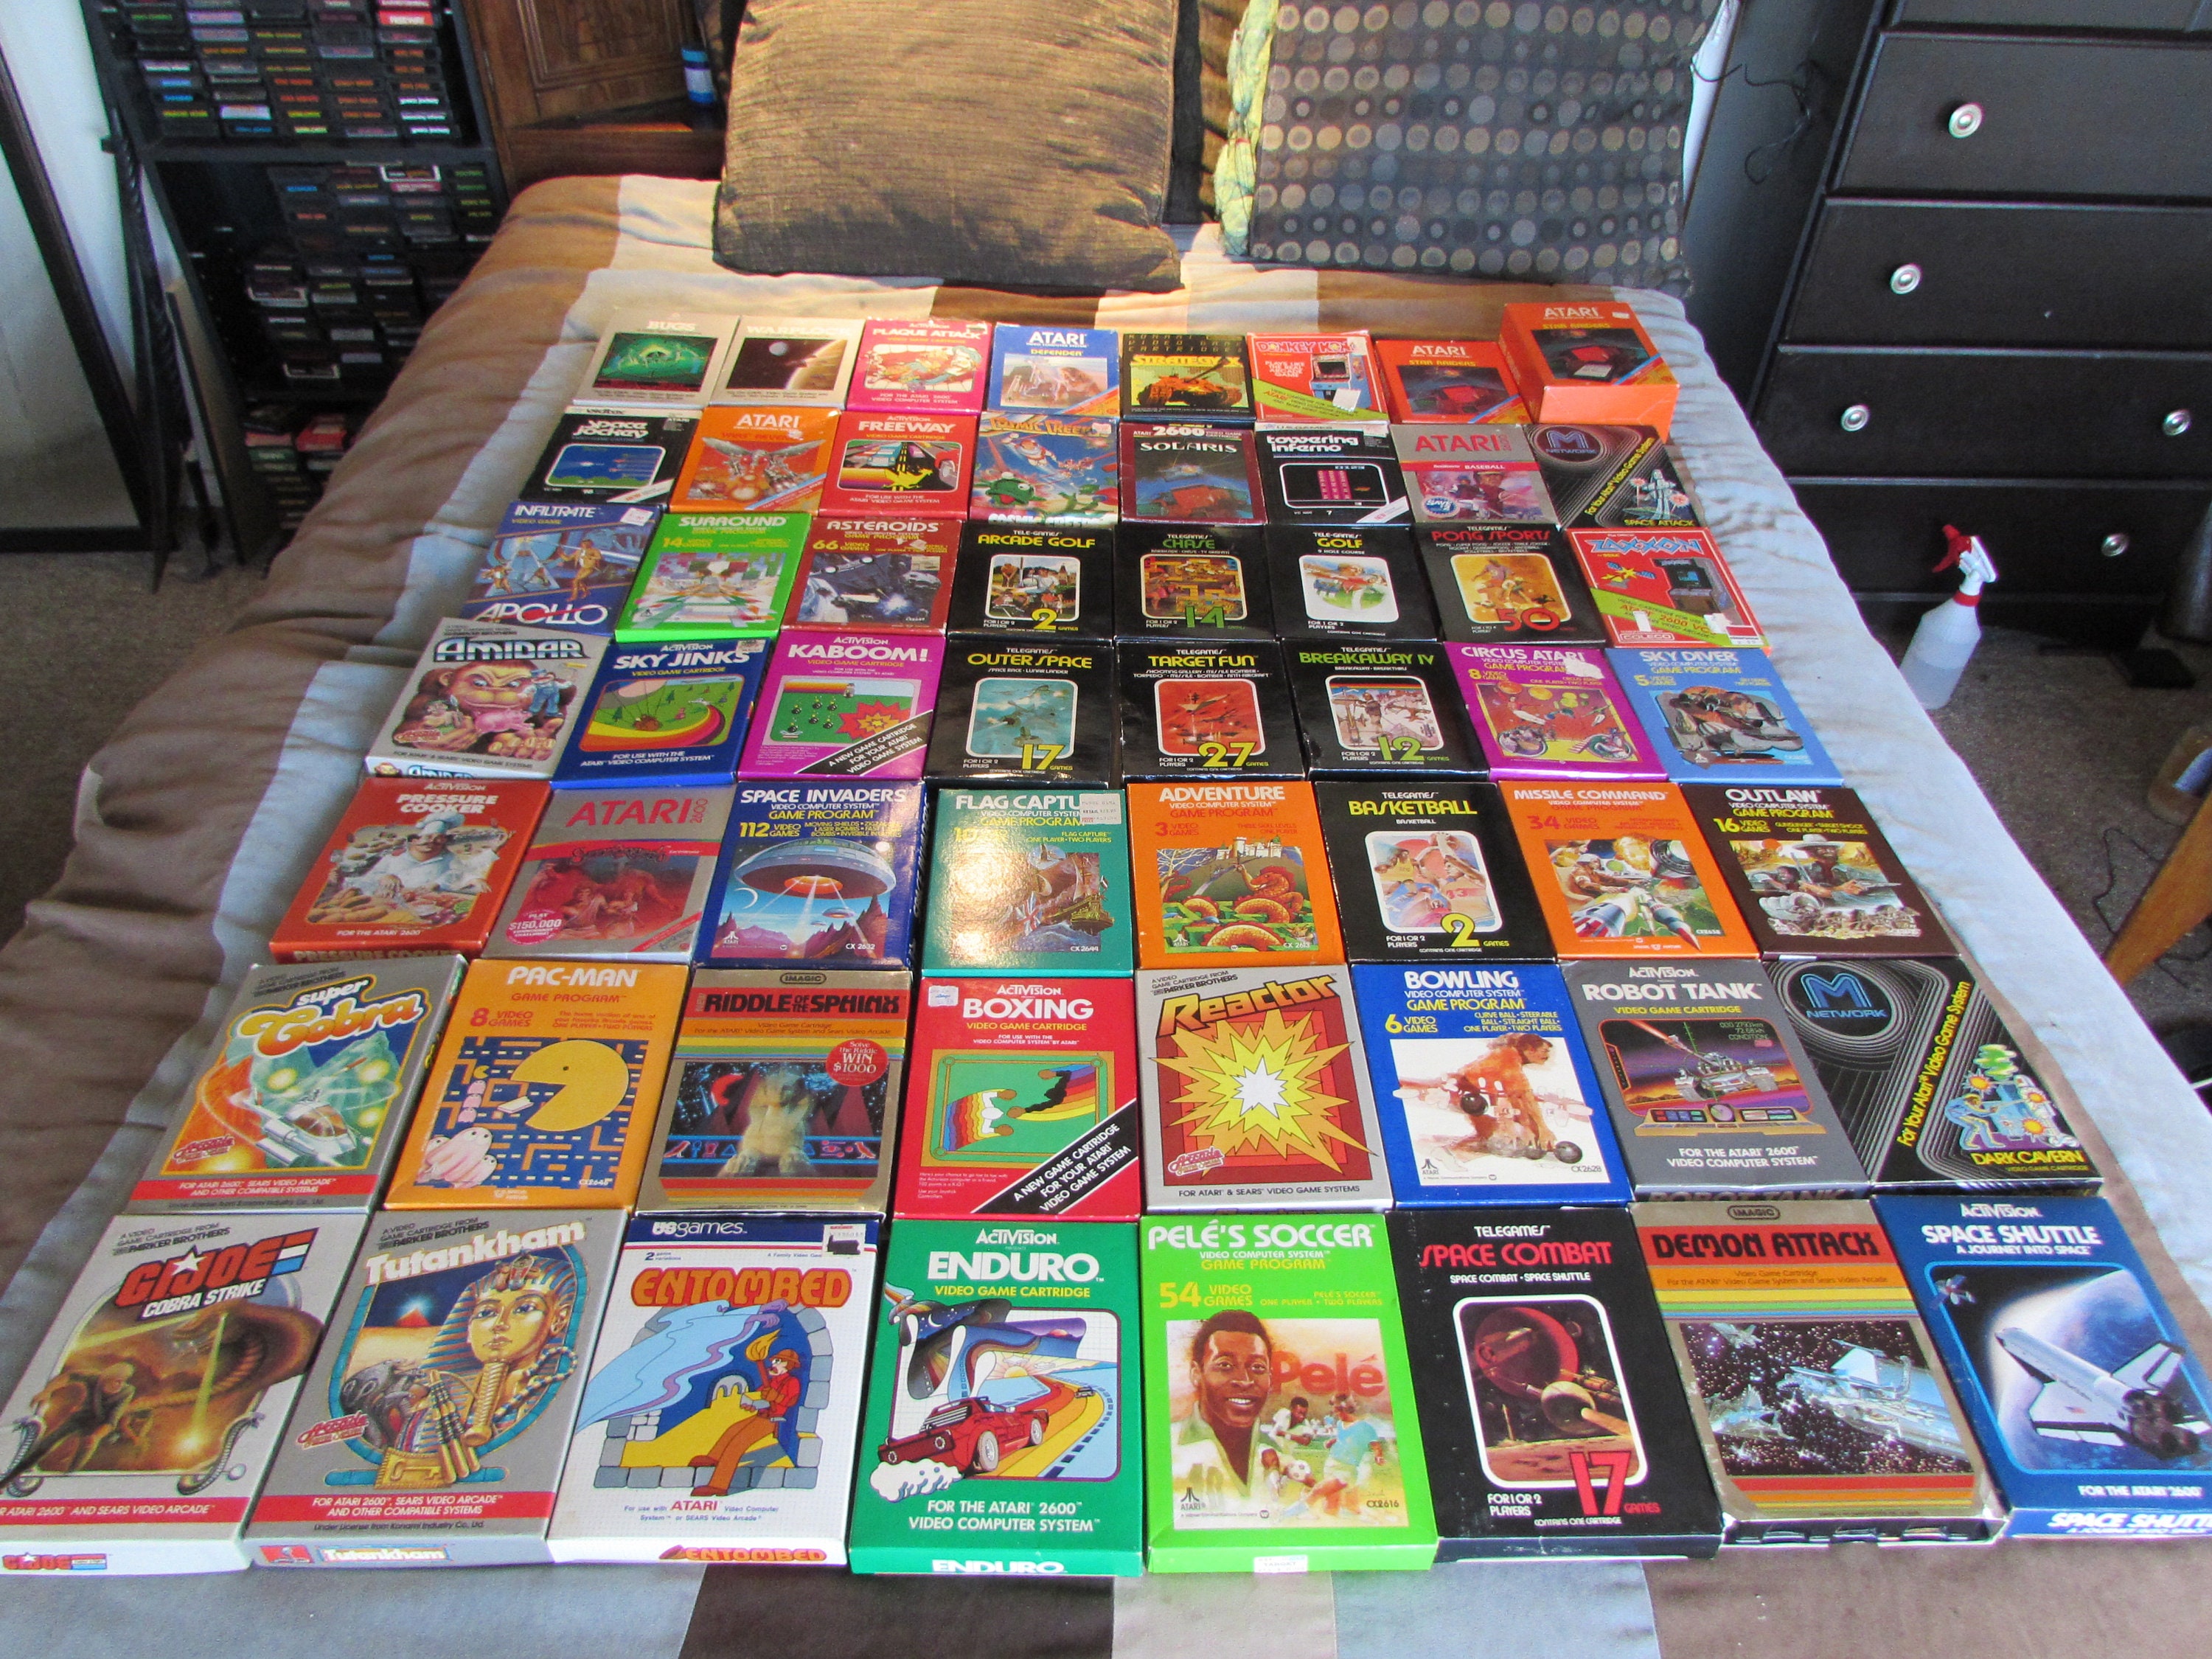 Purchase an Atari 2600+ (5-10 mins) – Atari Projects